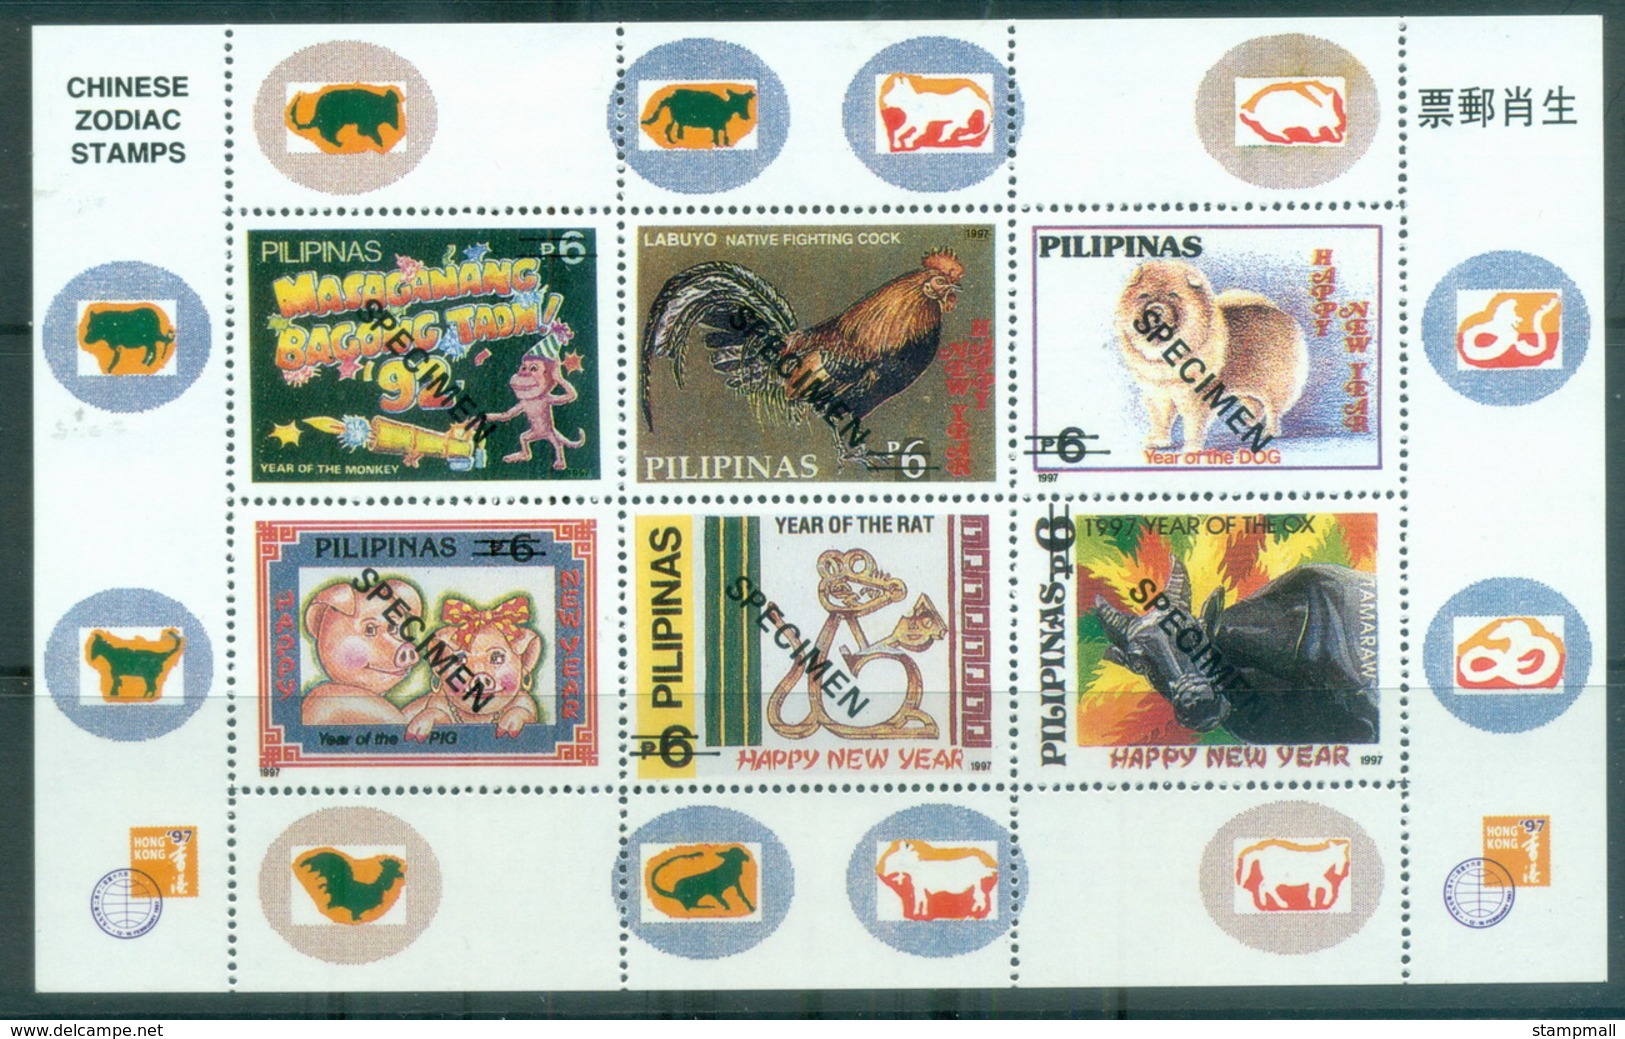 Philippines 1997 Chinese Zodiac Signs SPECIMEN MS MUH - Philippines